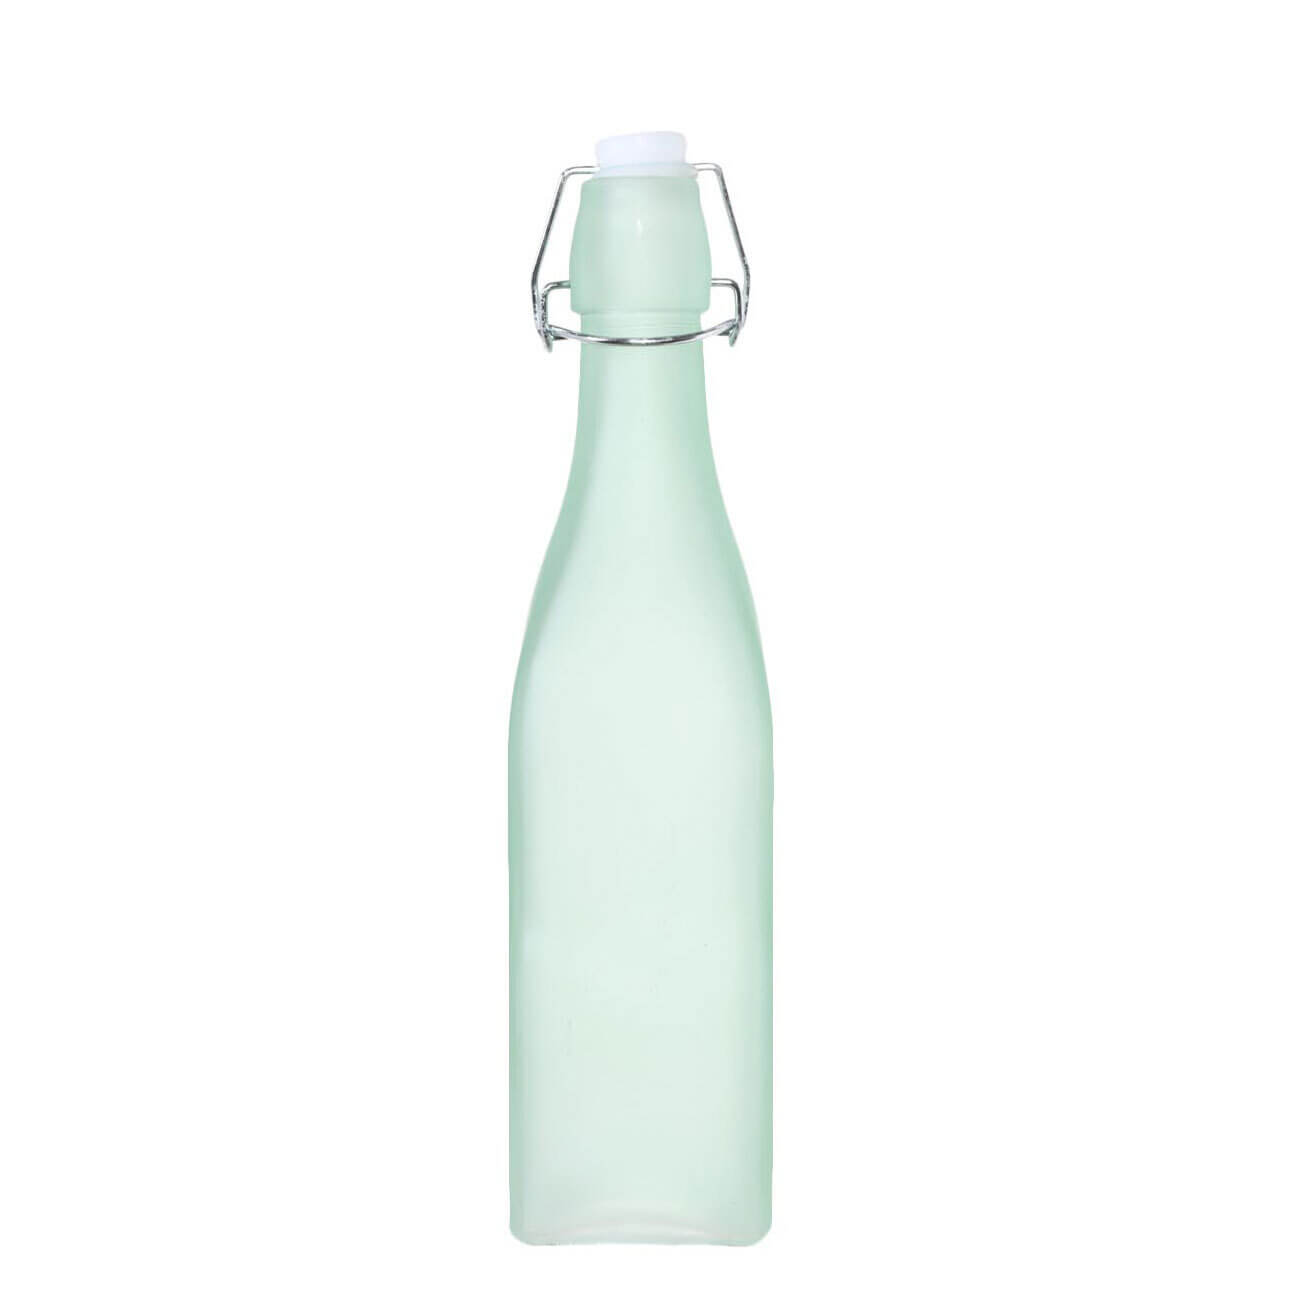 Бутылка для масла или уксуса, 500 мл, с клипсой, стекло/металл, зеленая, Light kitchen бутылка для масла или уксуса 700 мл с клипсой стекло р металл ribby